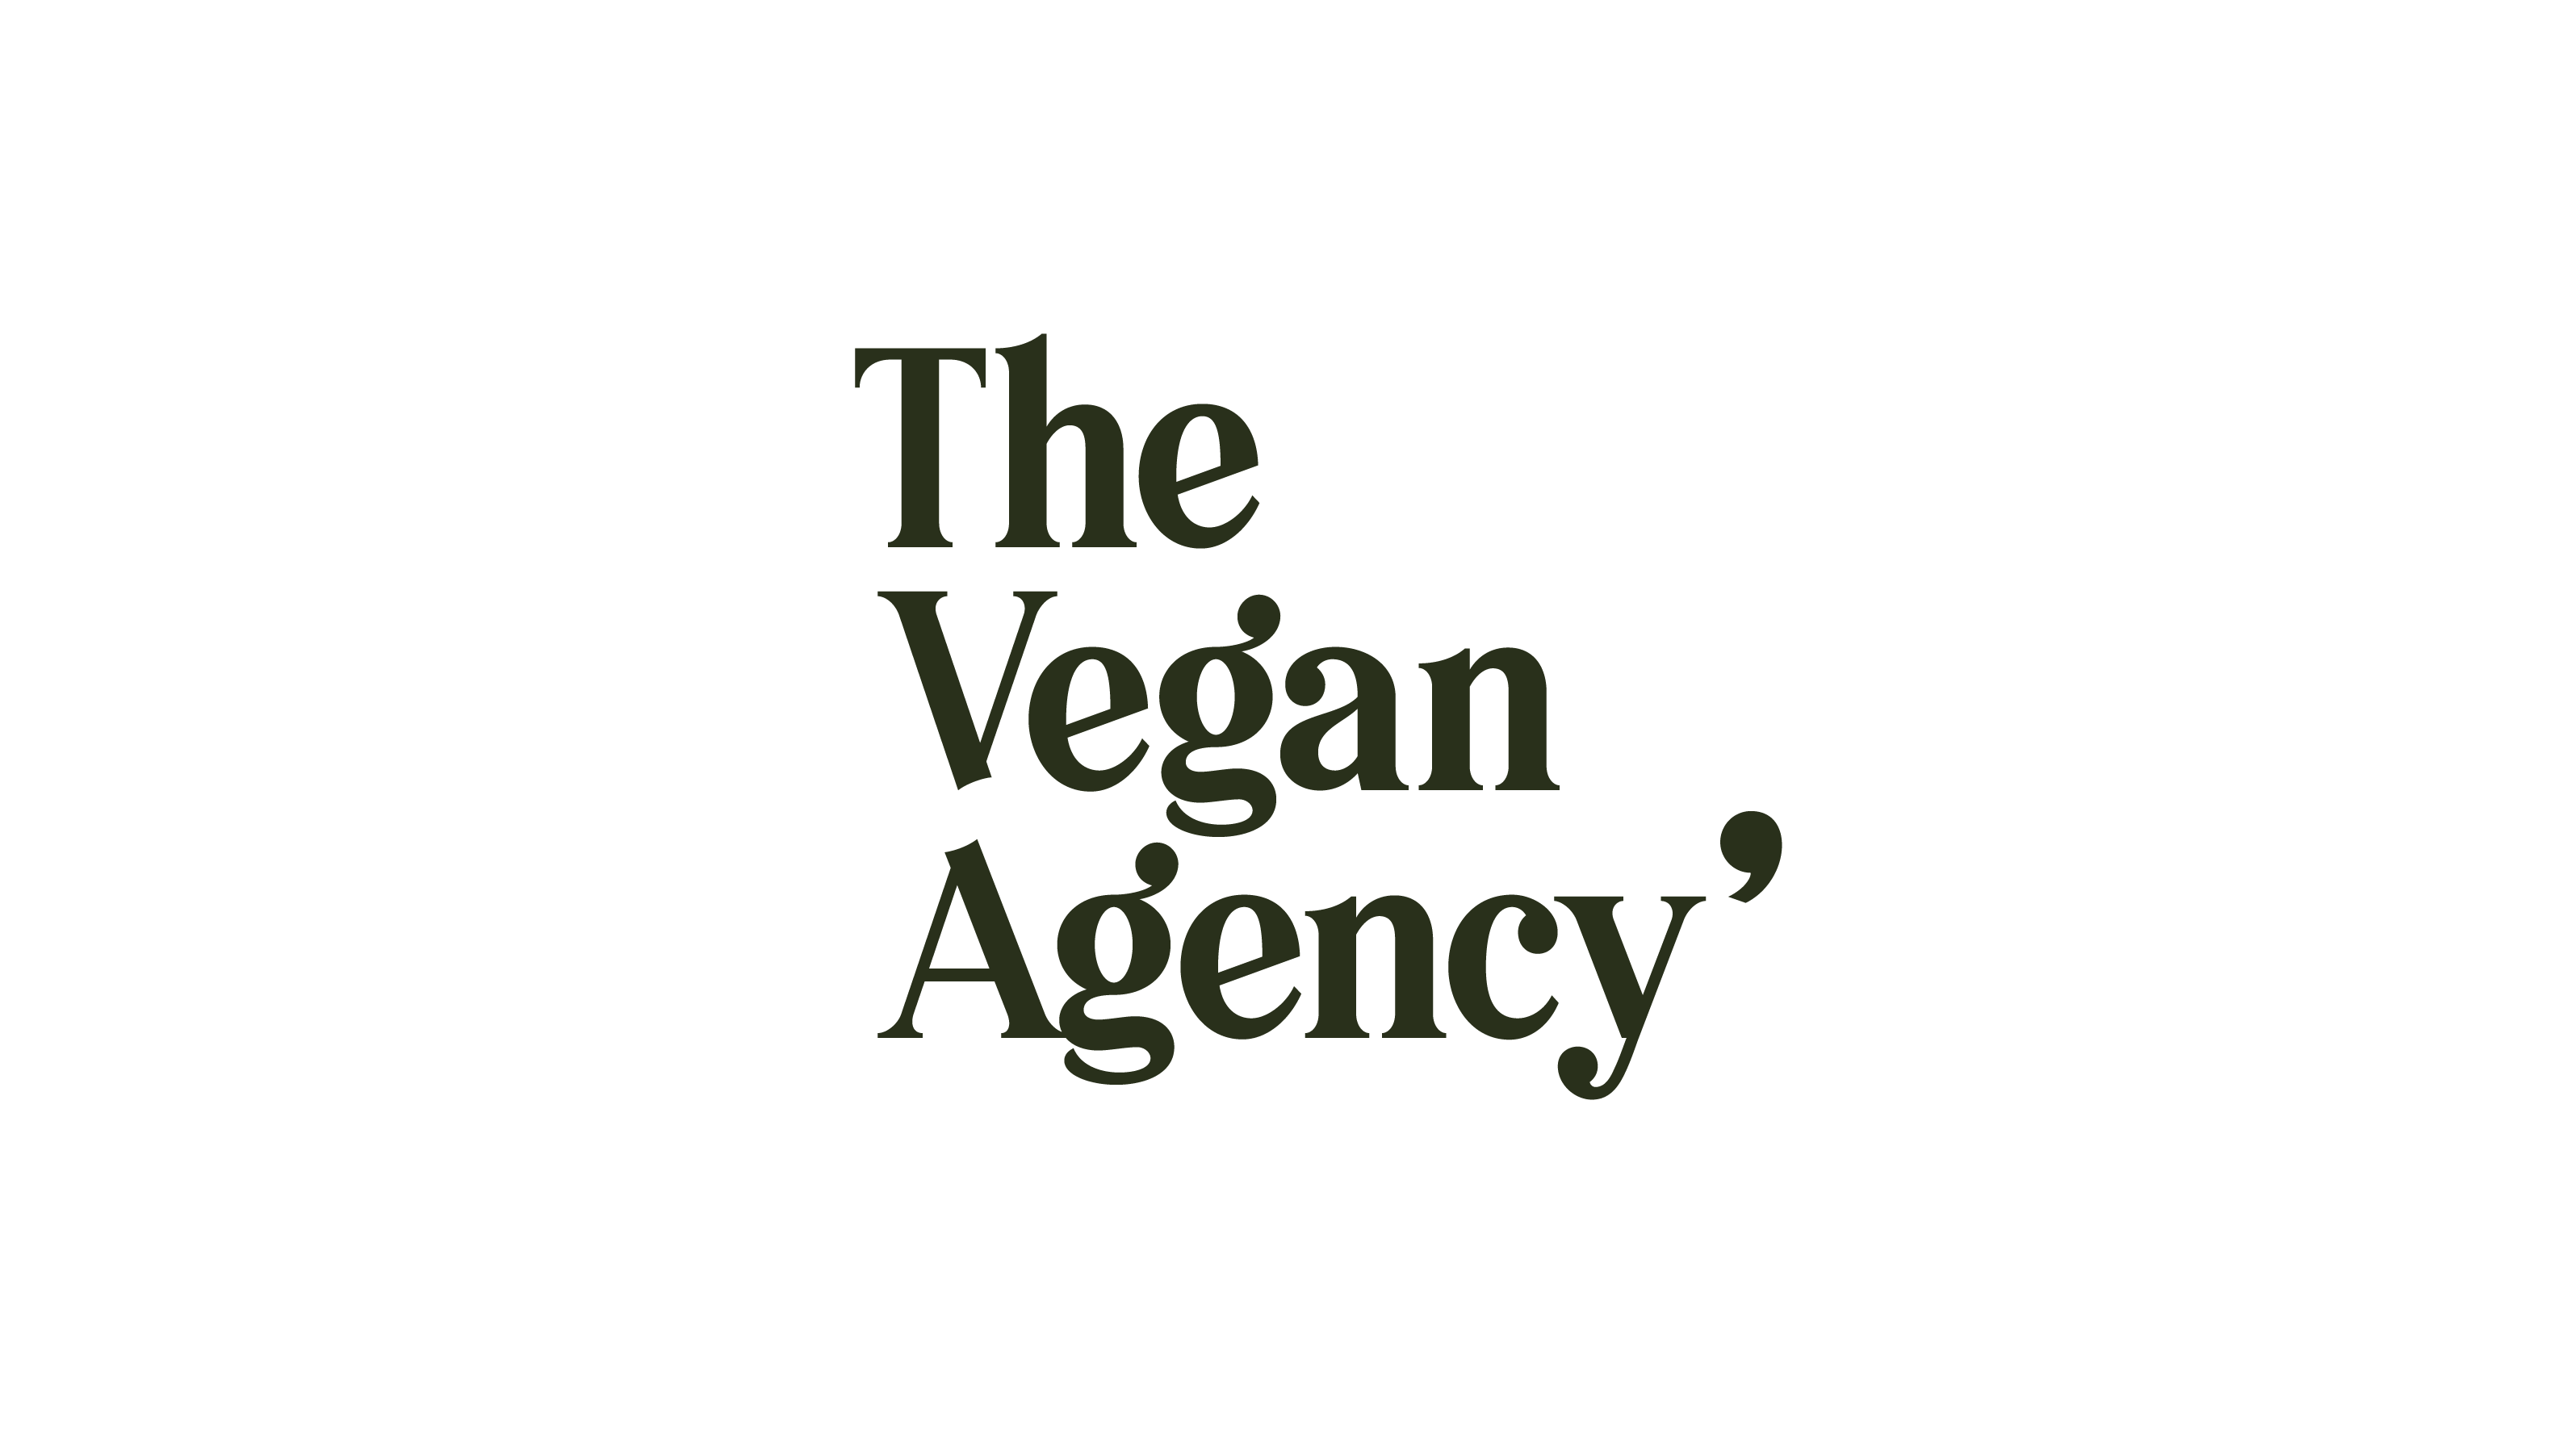 transparent - The Vegan Agency_ok-13